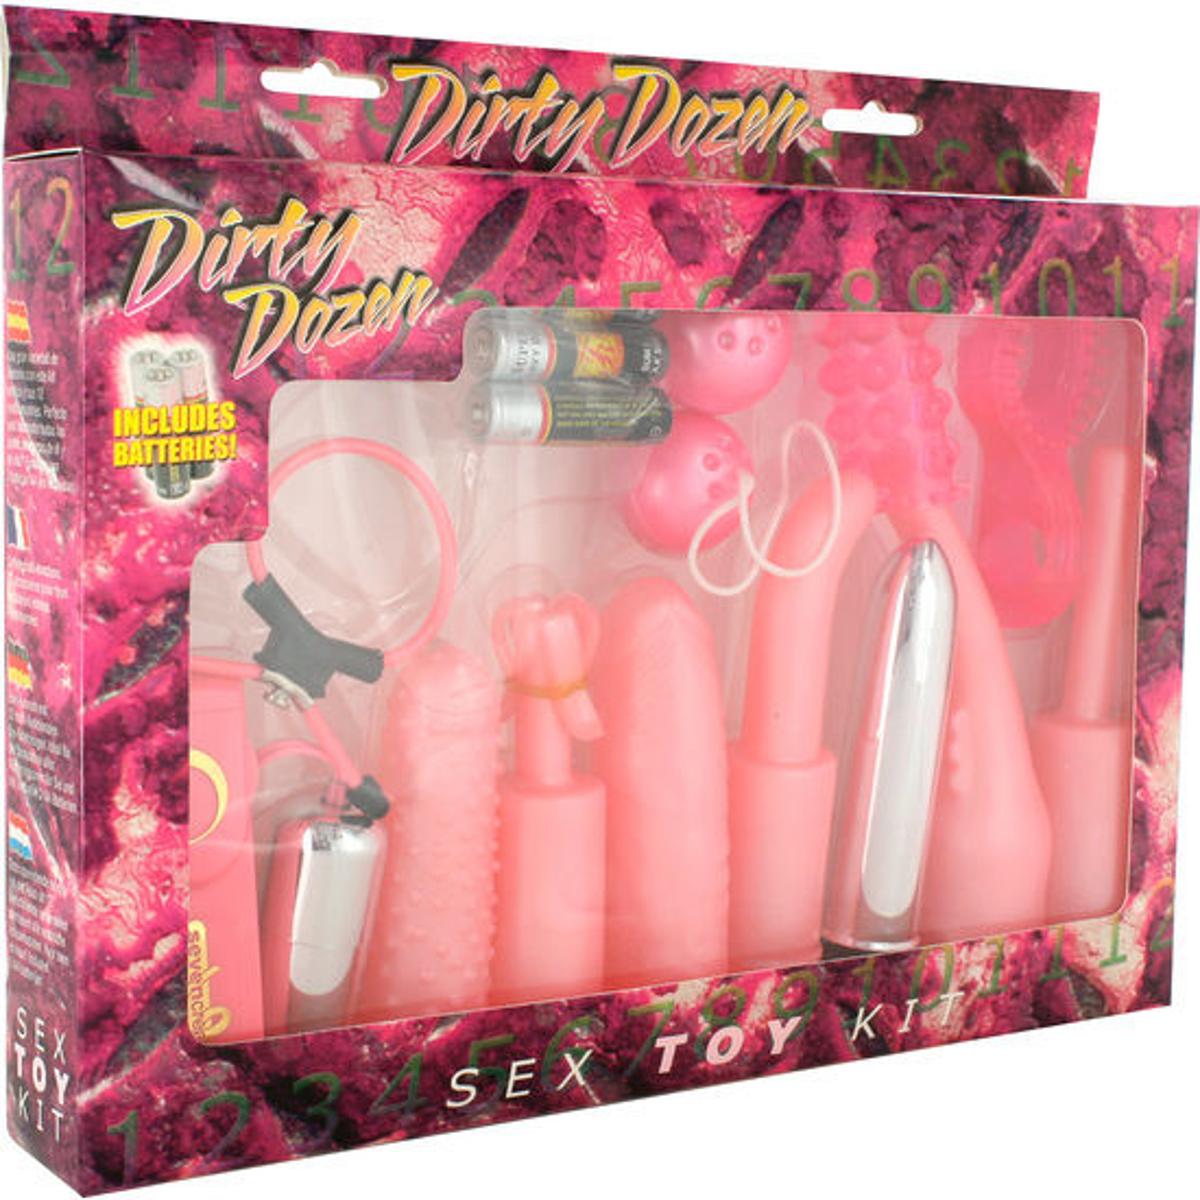 Sexspielzeug-Set "Dirty Dozen", 12-teilig - OH MY! FANTASY